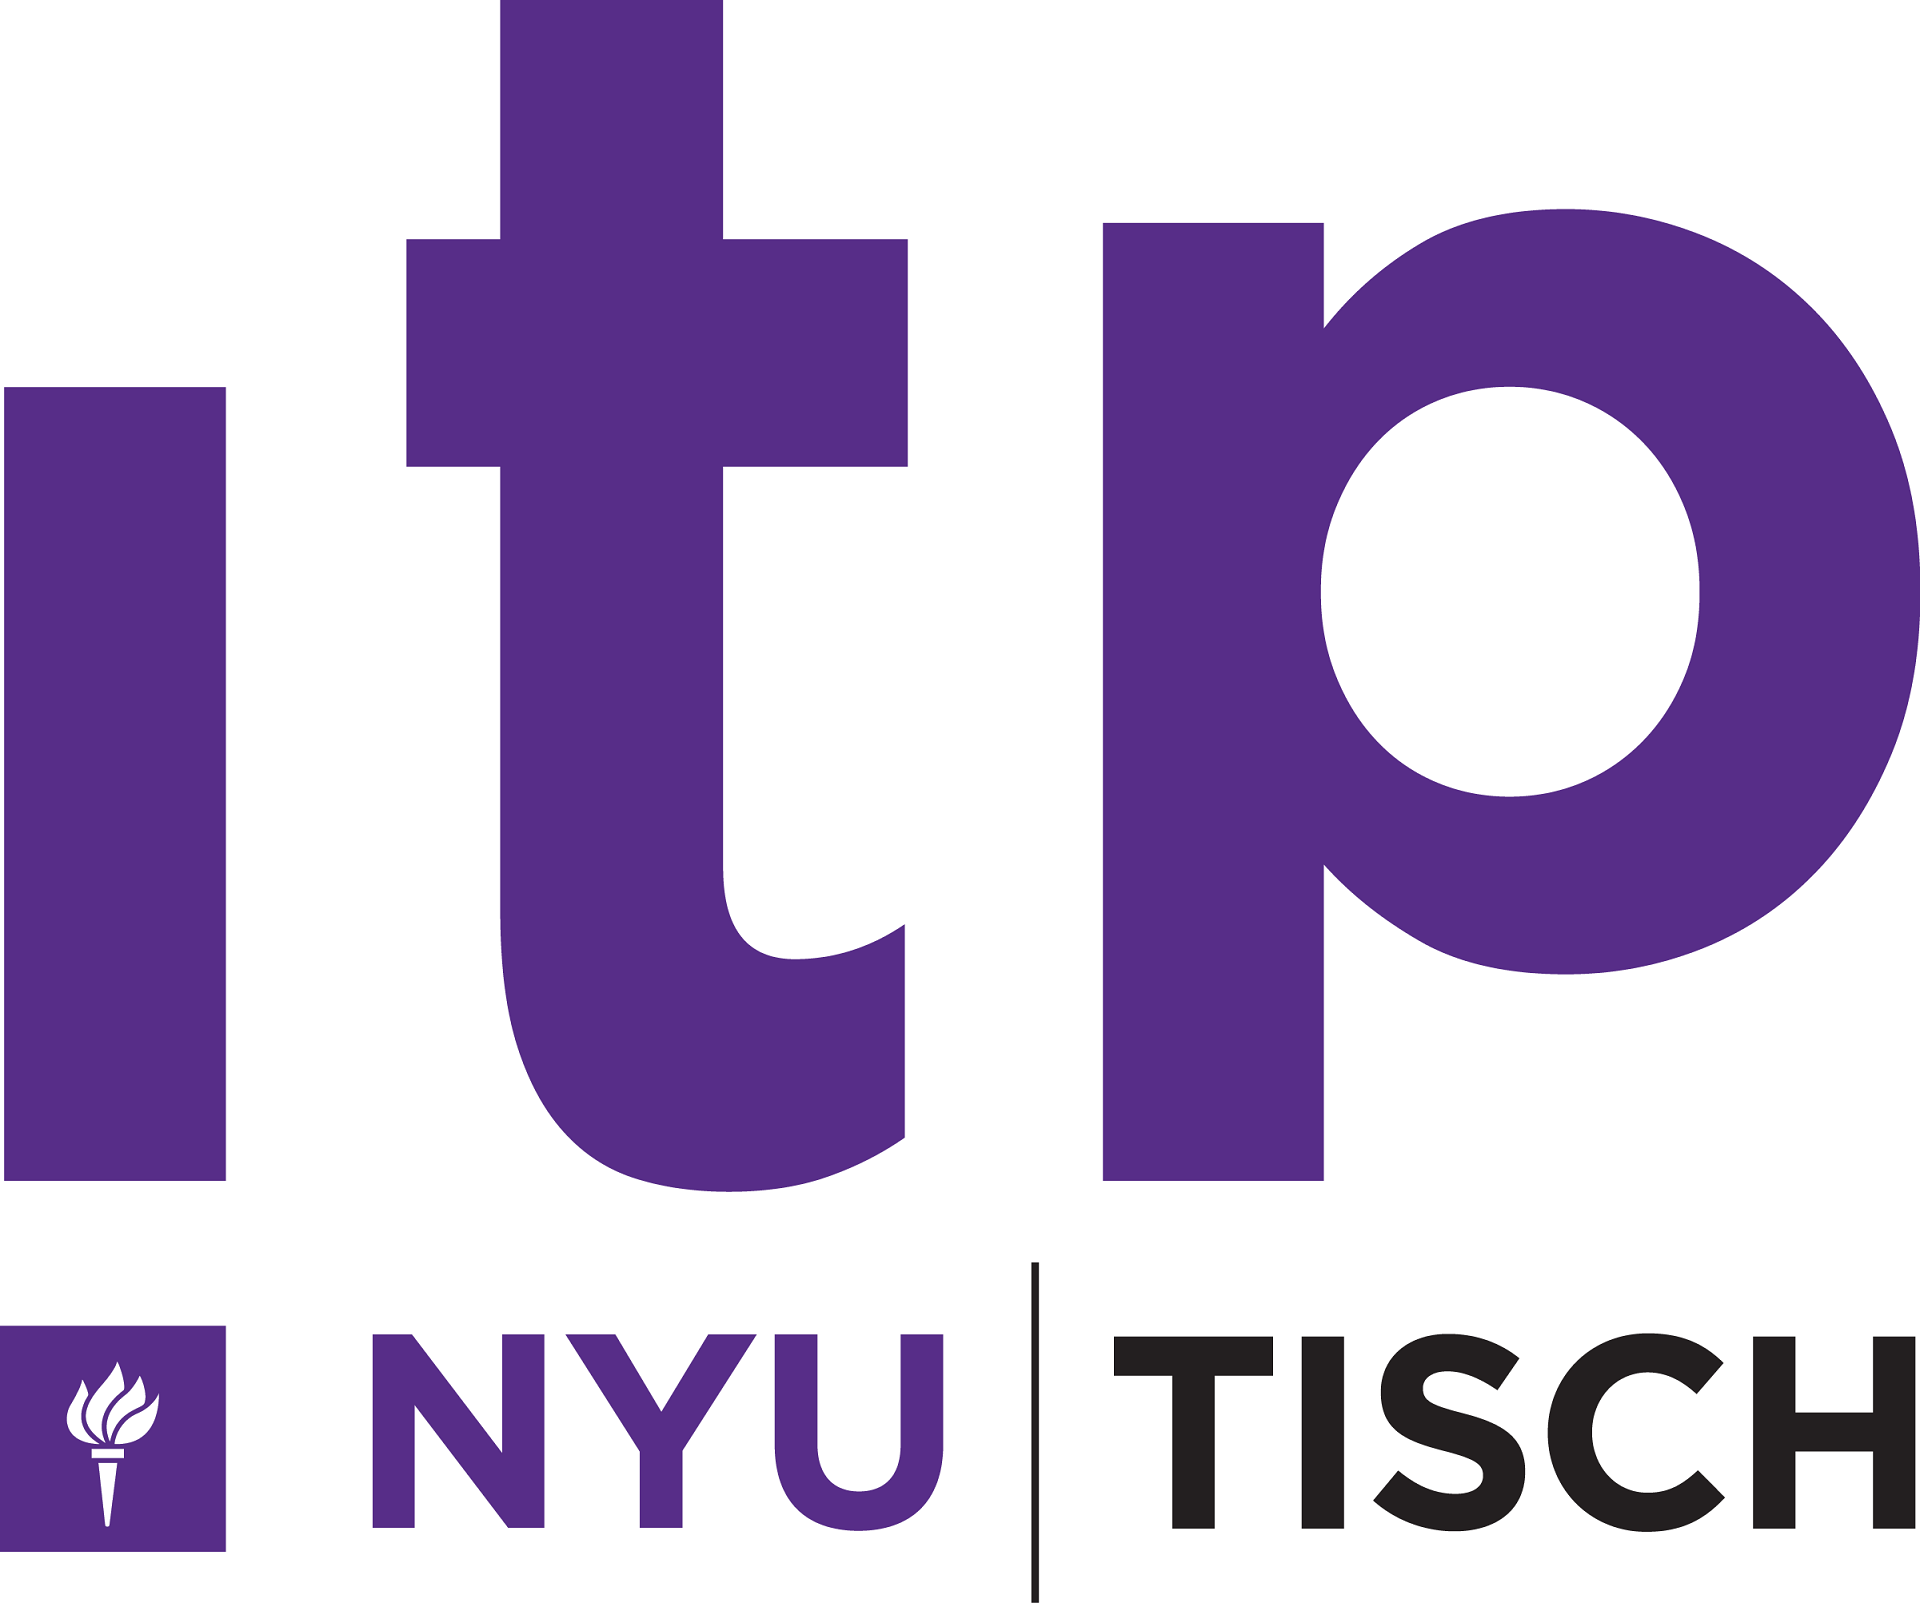 Image of ITP NYU Tisch written in purple and black.